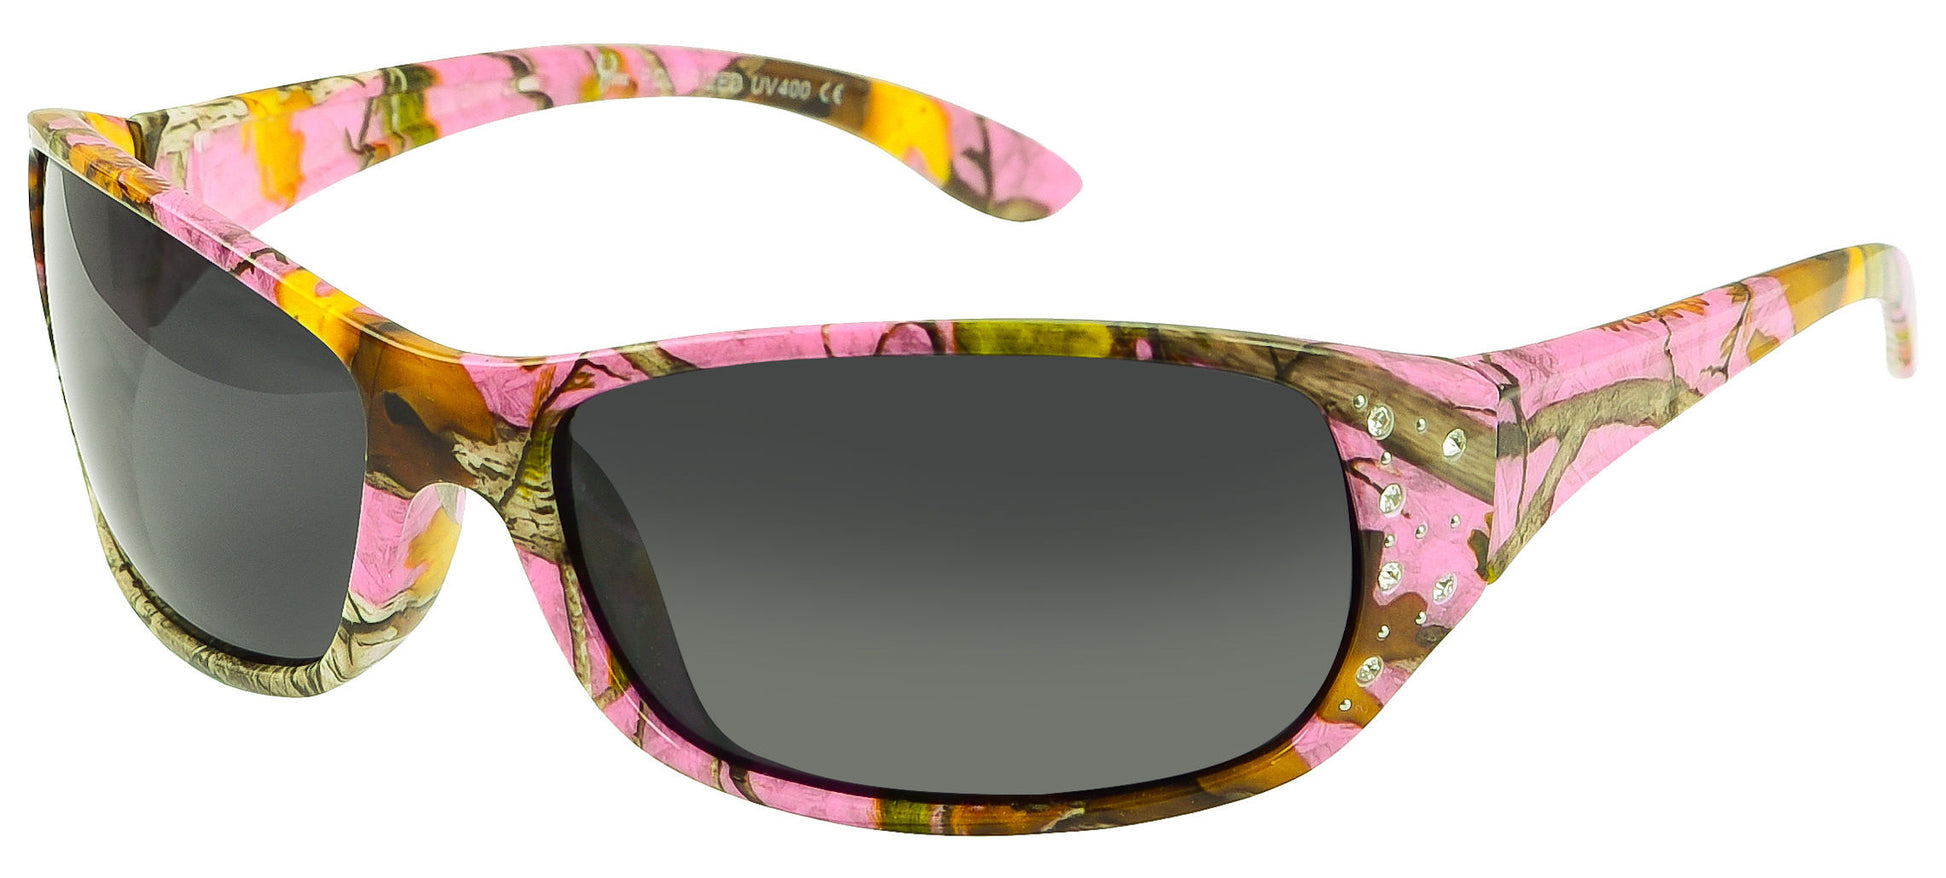 Main image: Polarized Purple Camo Sunglasses for Women - Elettra - Purple Camo Frame - Smoke Lens